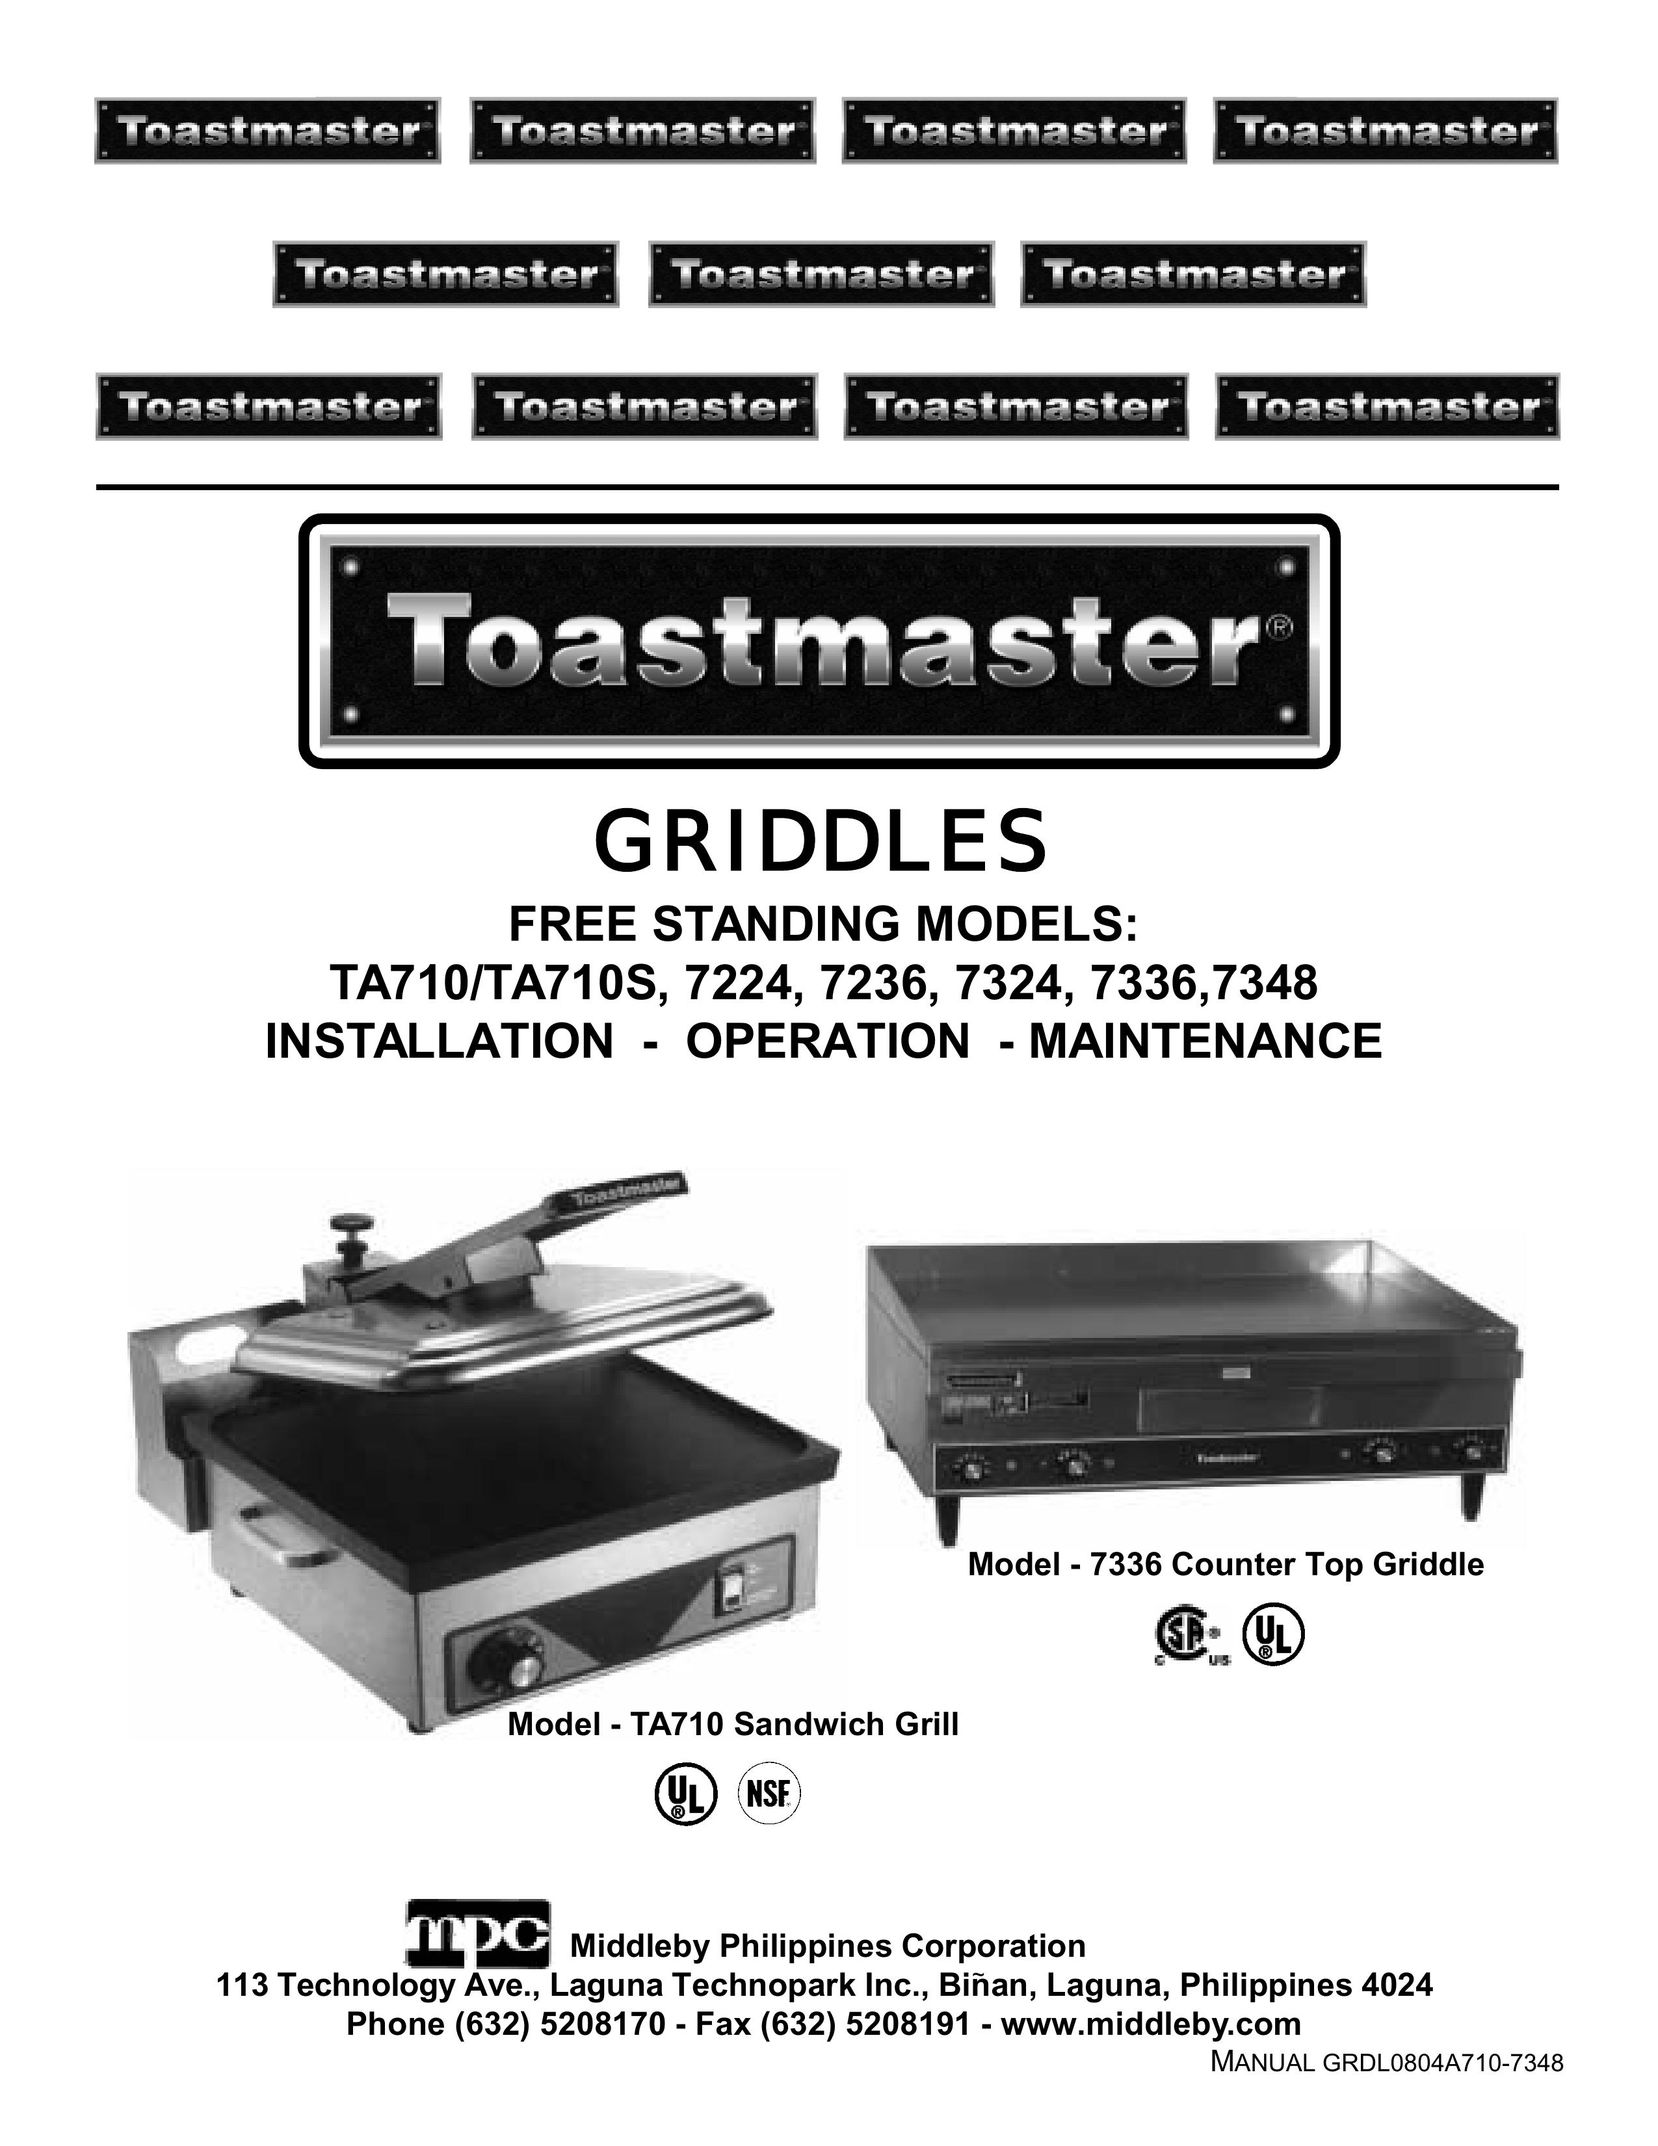 Toastmaster 7224 Griddle User Manual